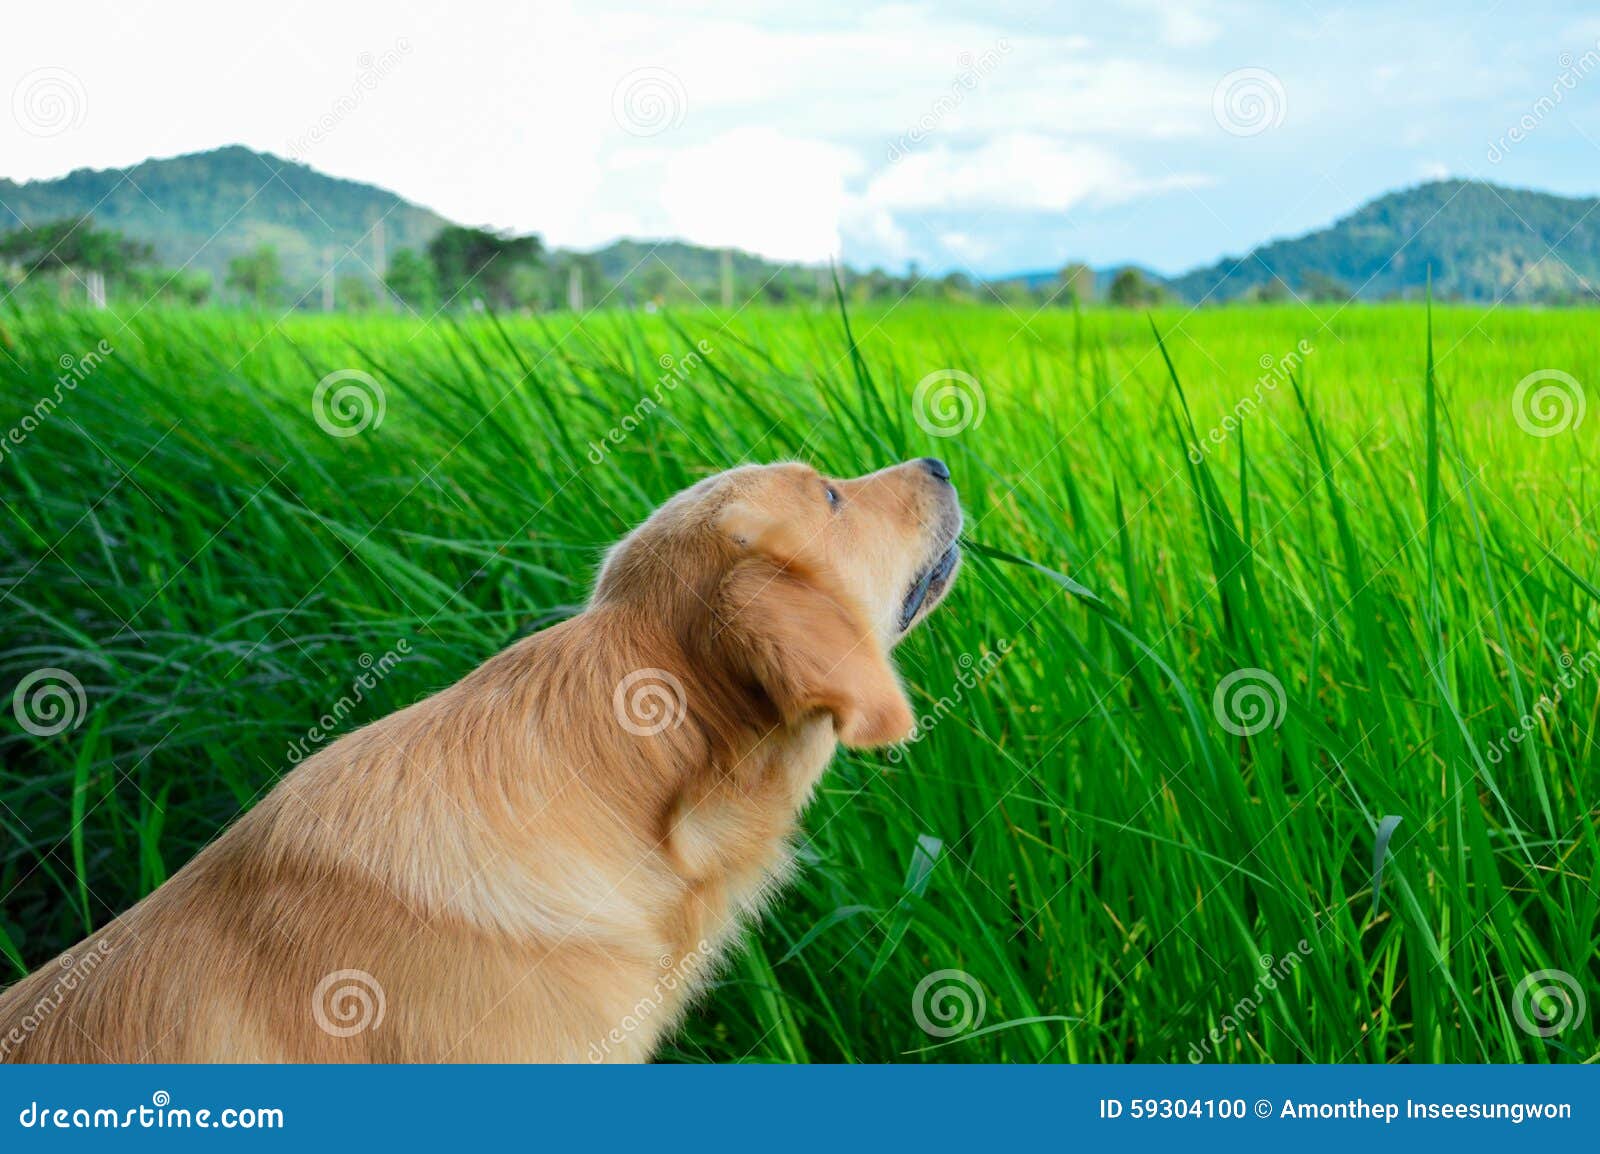 Едят ли собаки траву. Собака на газоне. Собака травка. Собака на траве. Собака на лужайке.